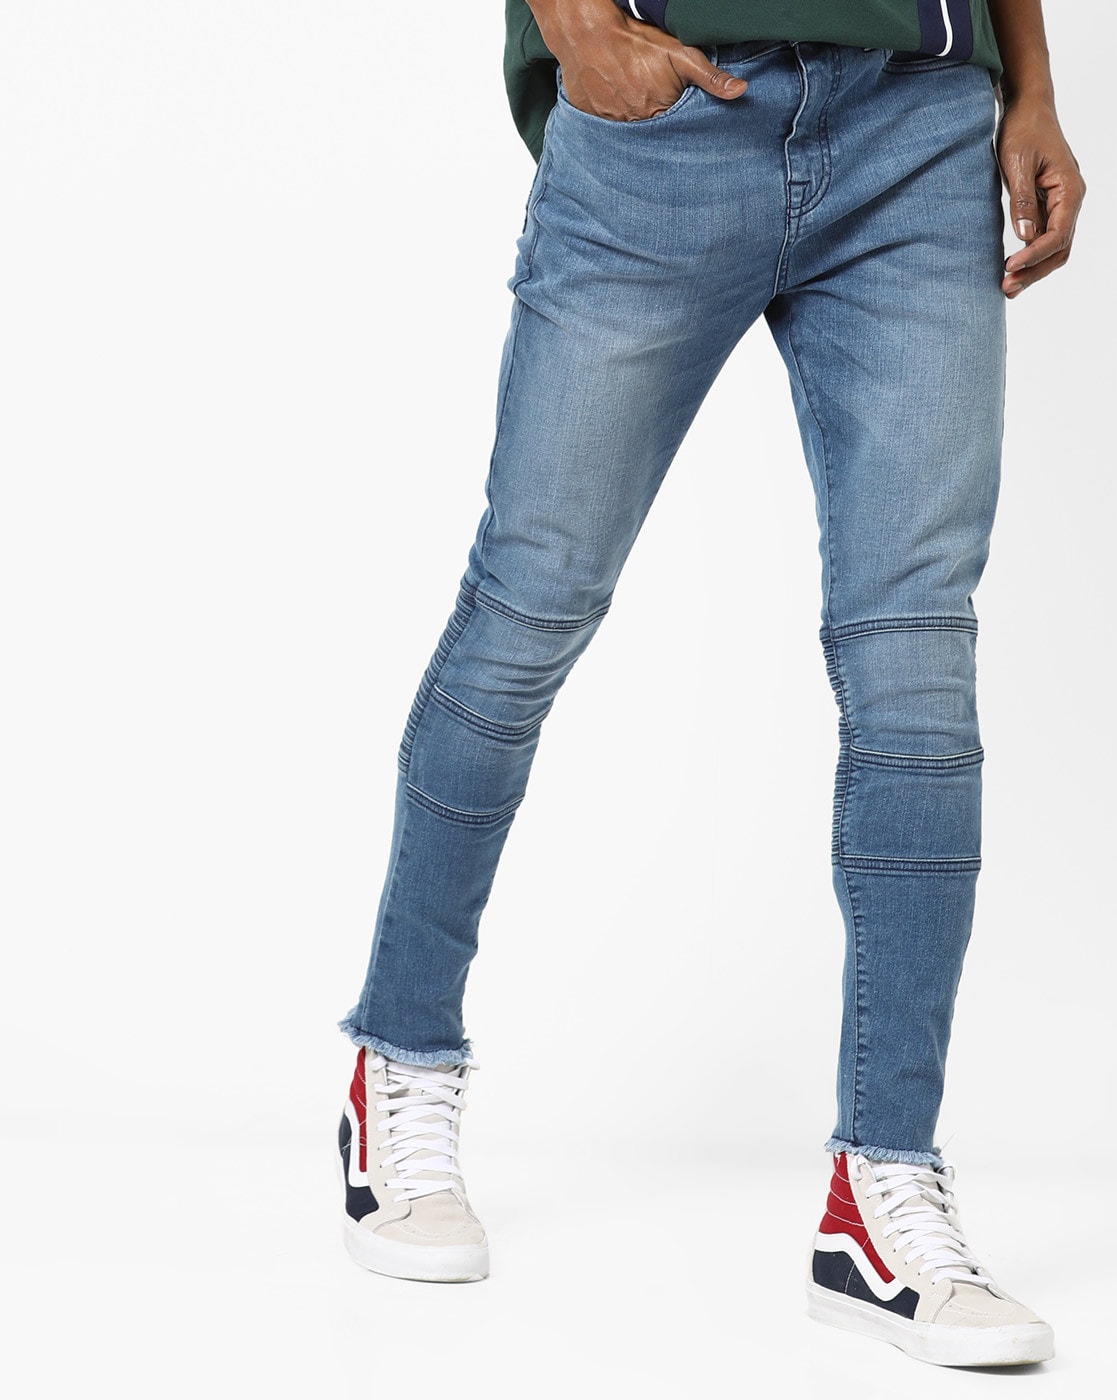 drop crotch jeans